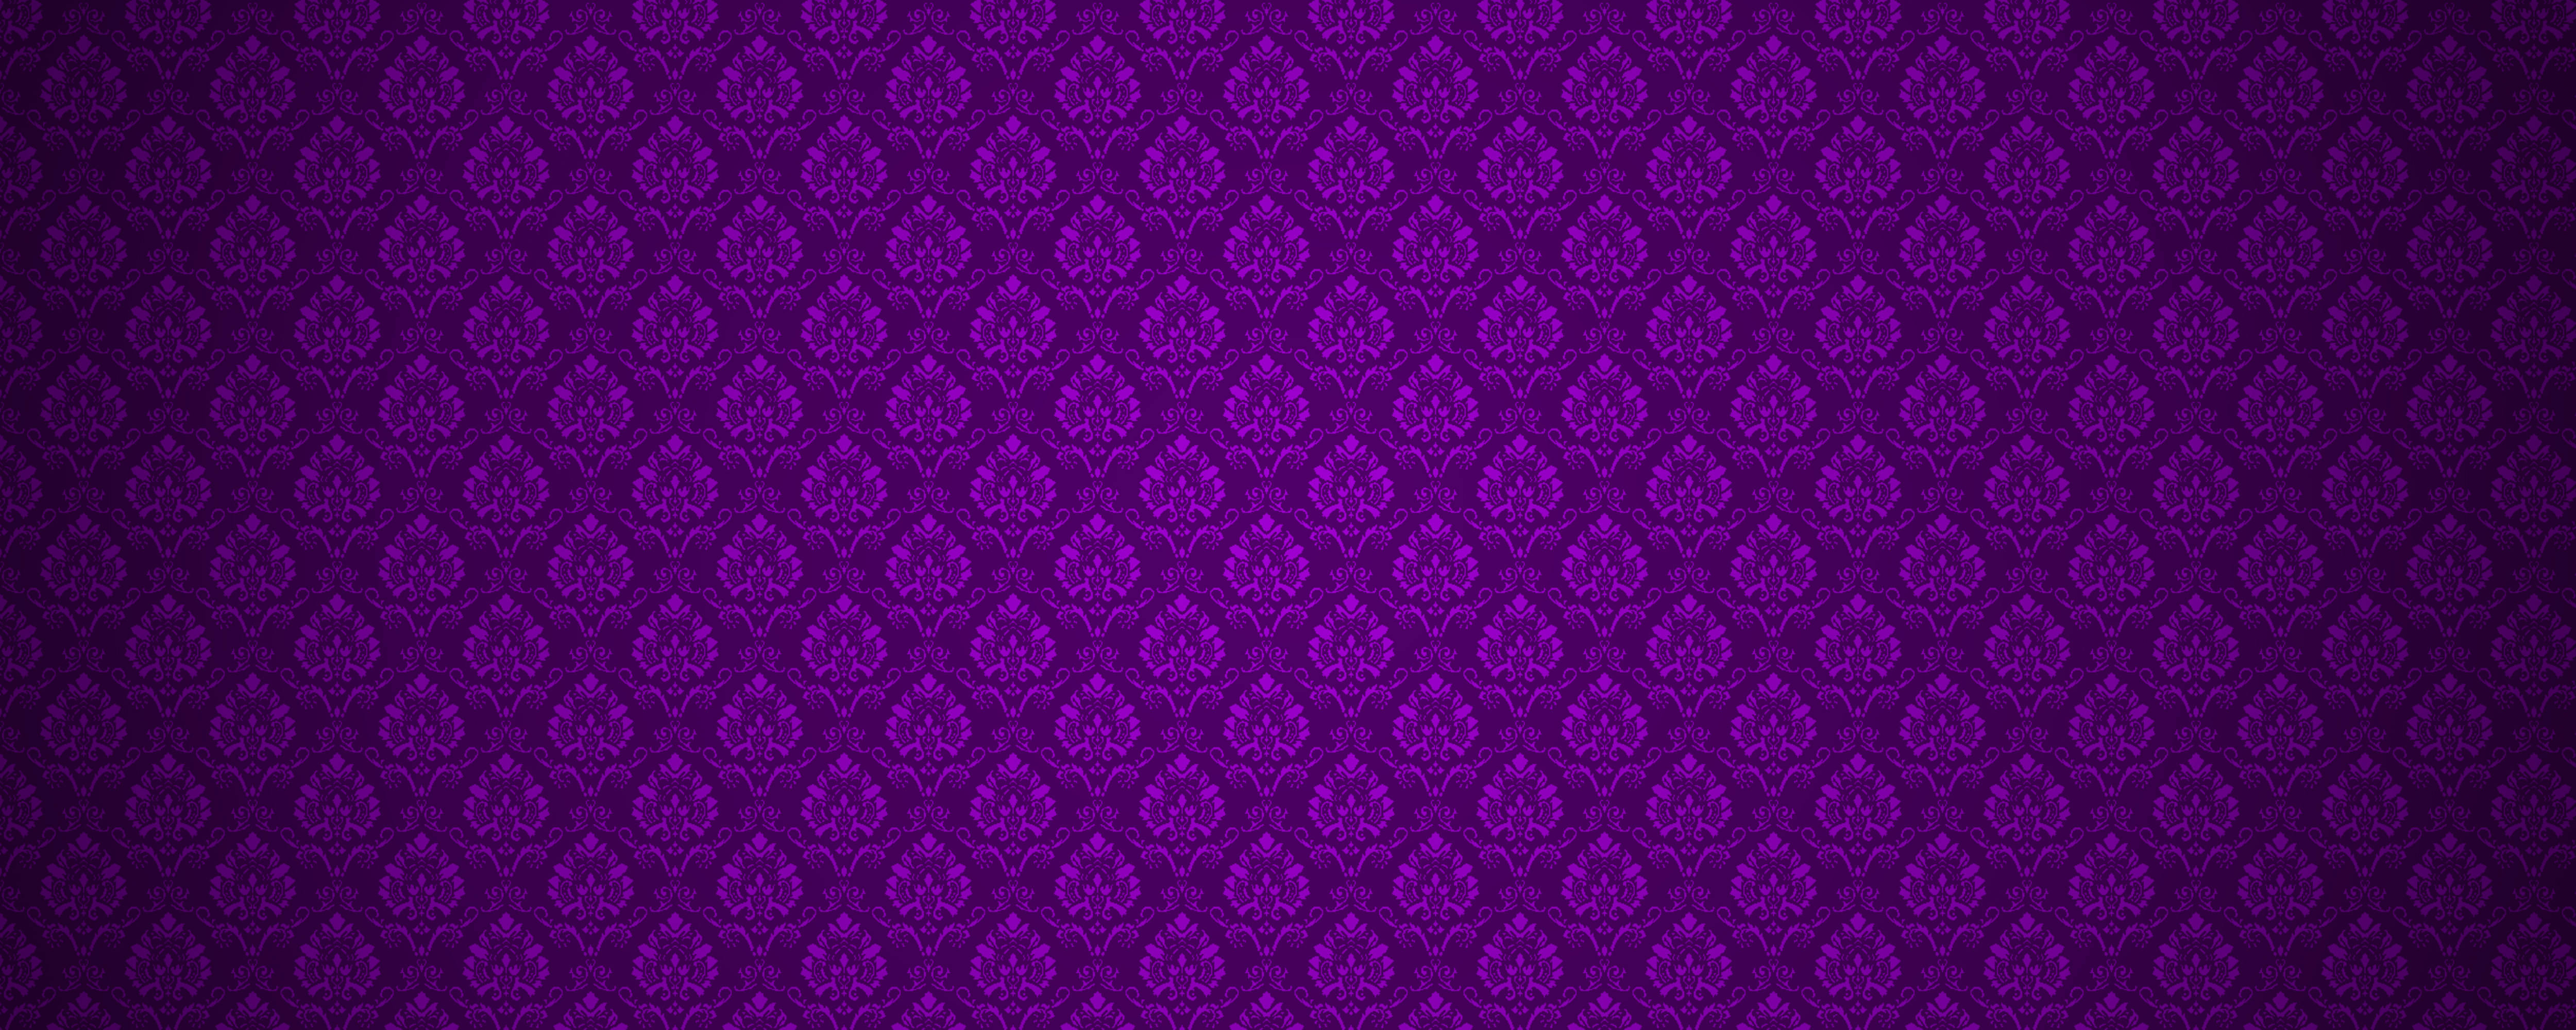 [48+] Royal Purple Wallpaper on WallpaperSafari